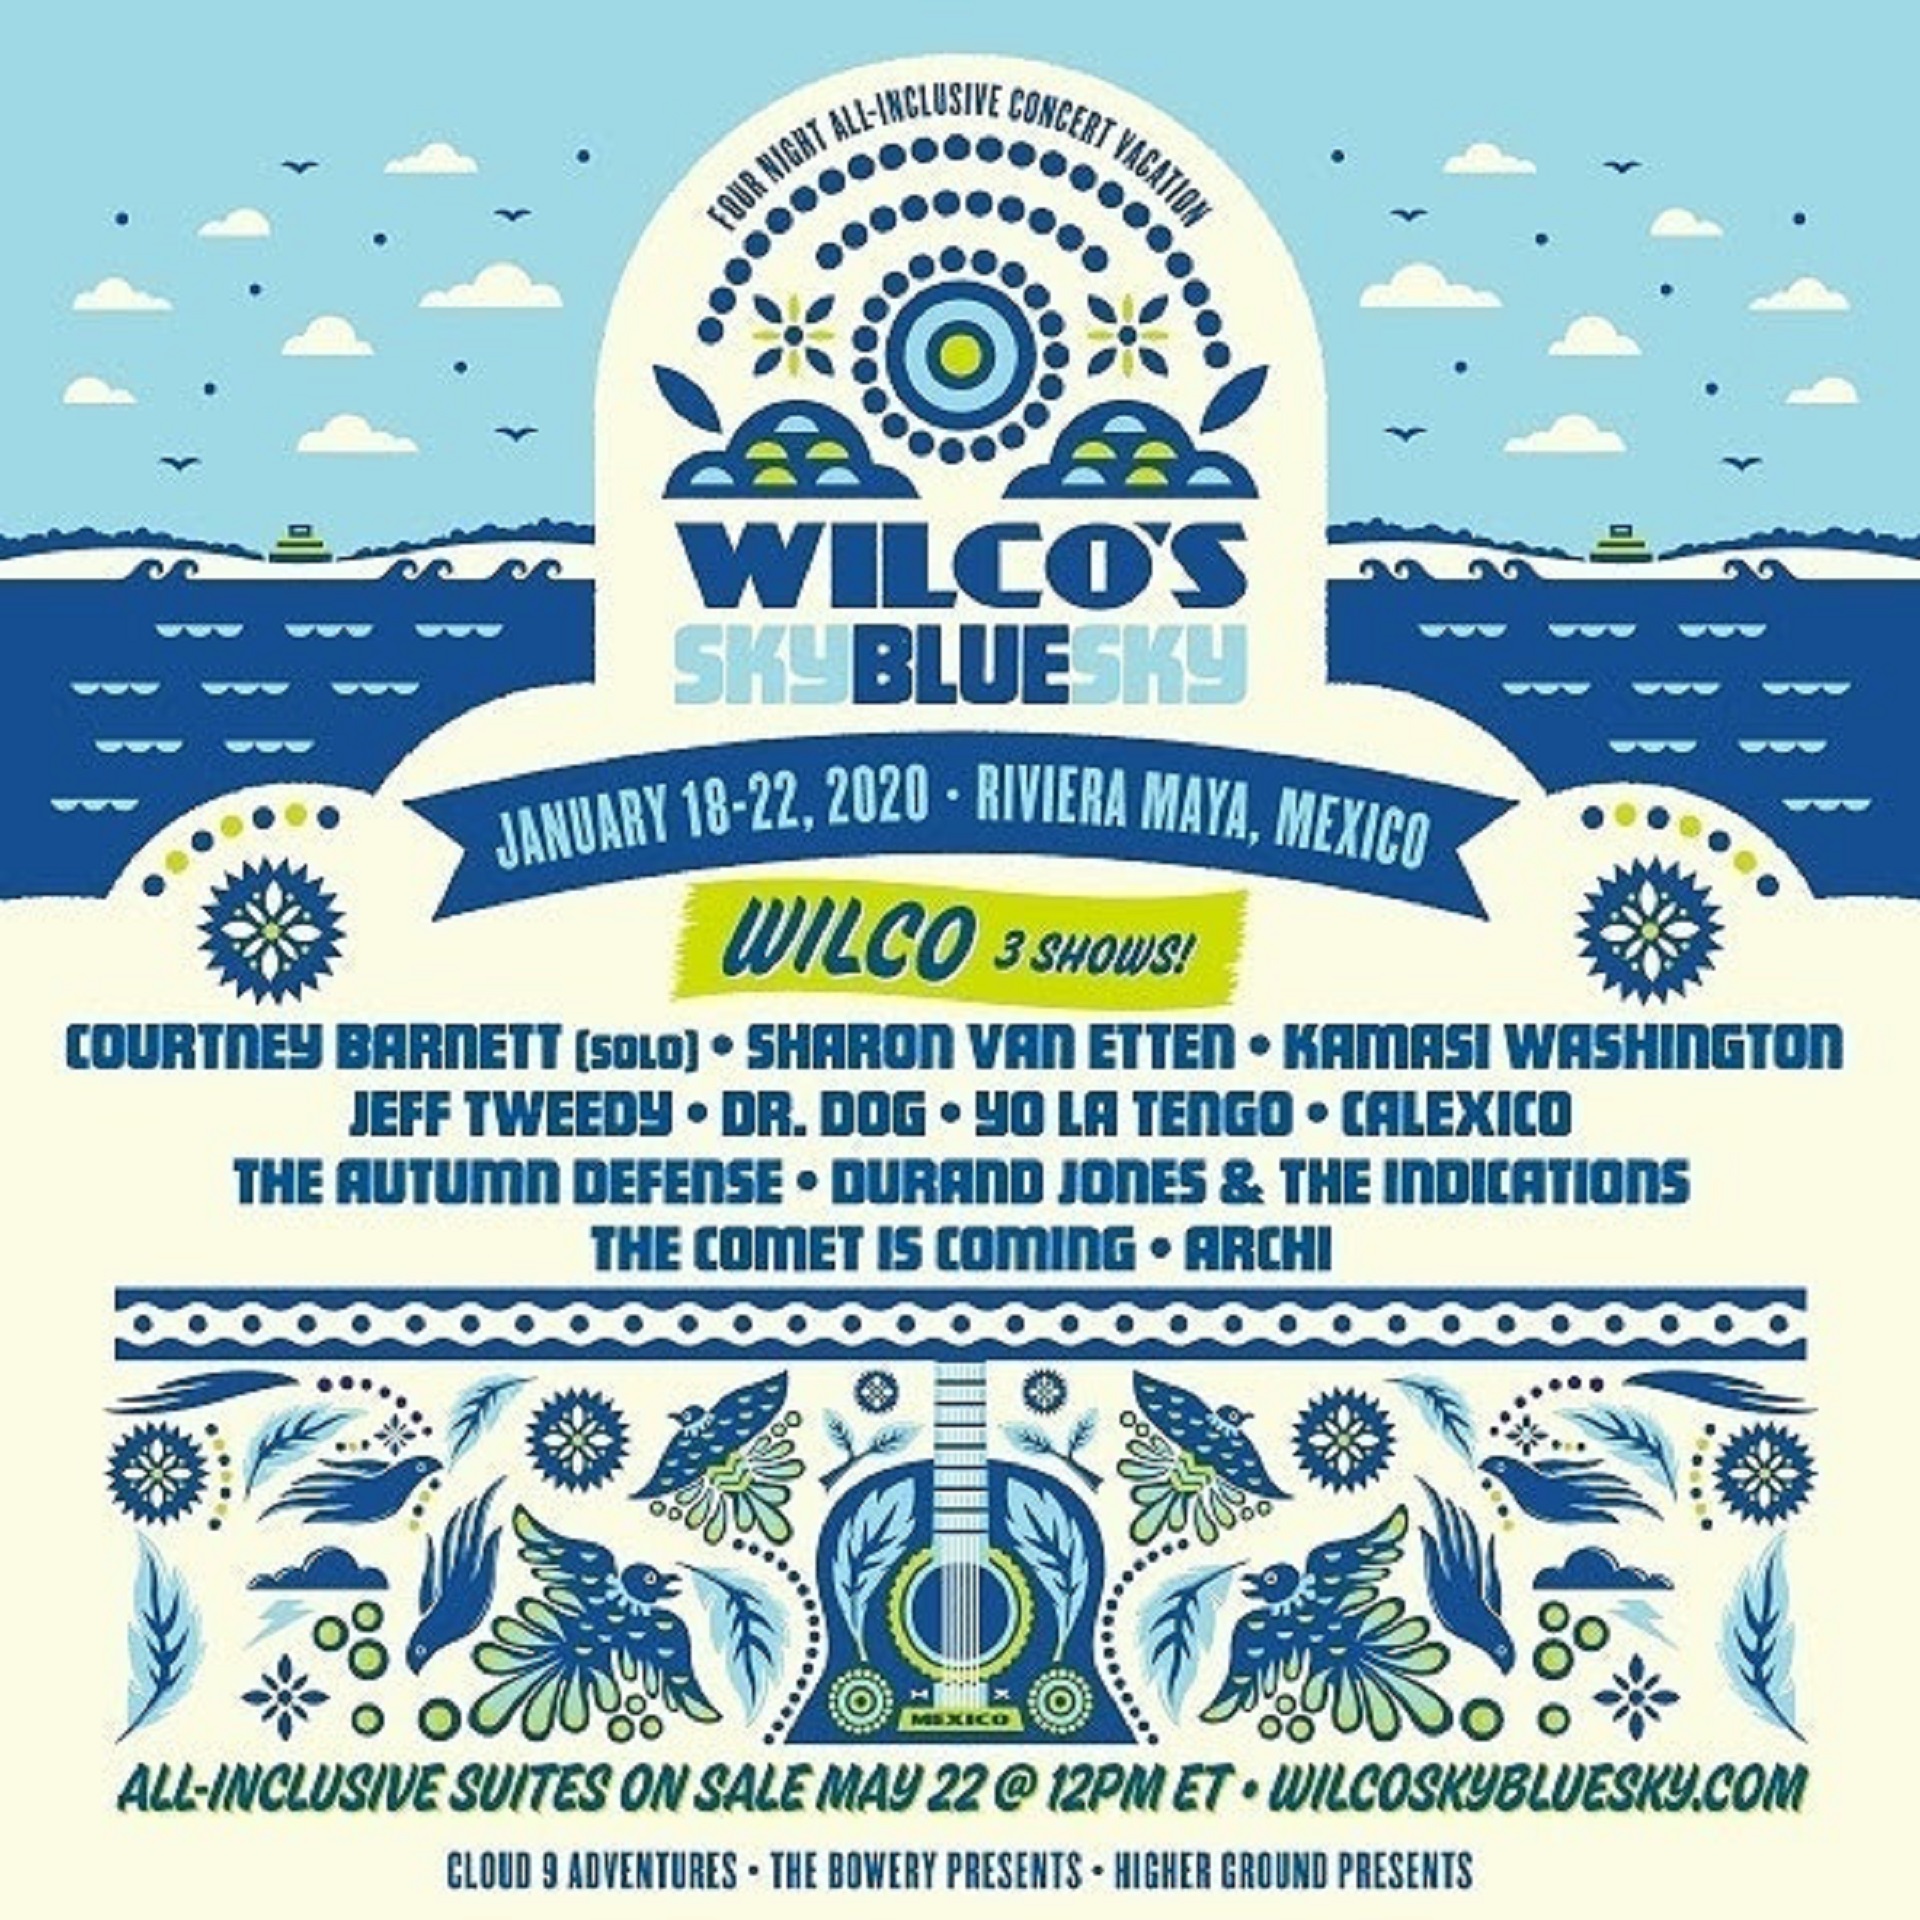 Wilco Announces Sky Blue Sky, January 18-22 in Riviera Maya, Mexico